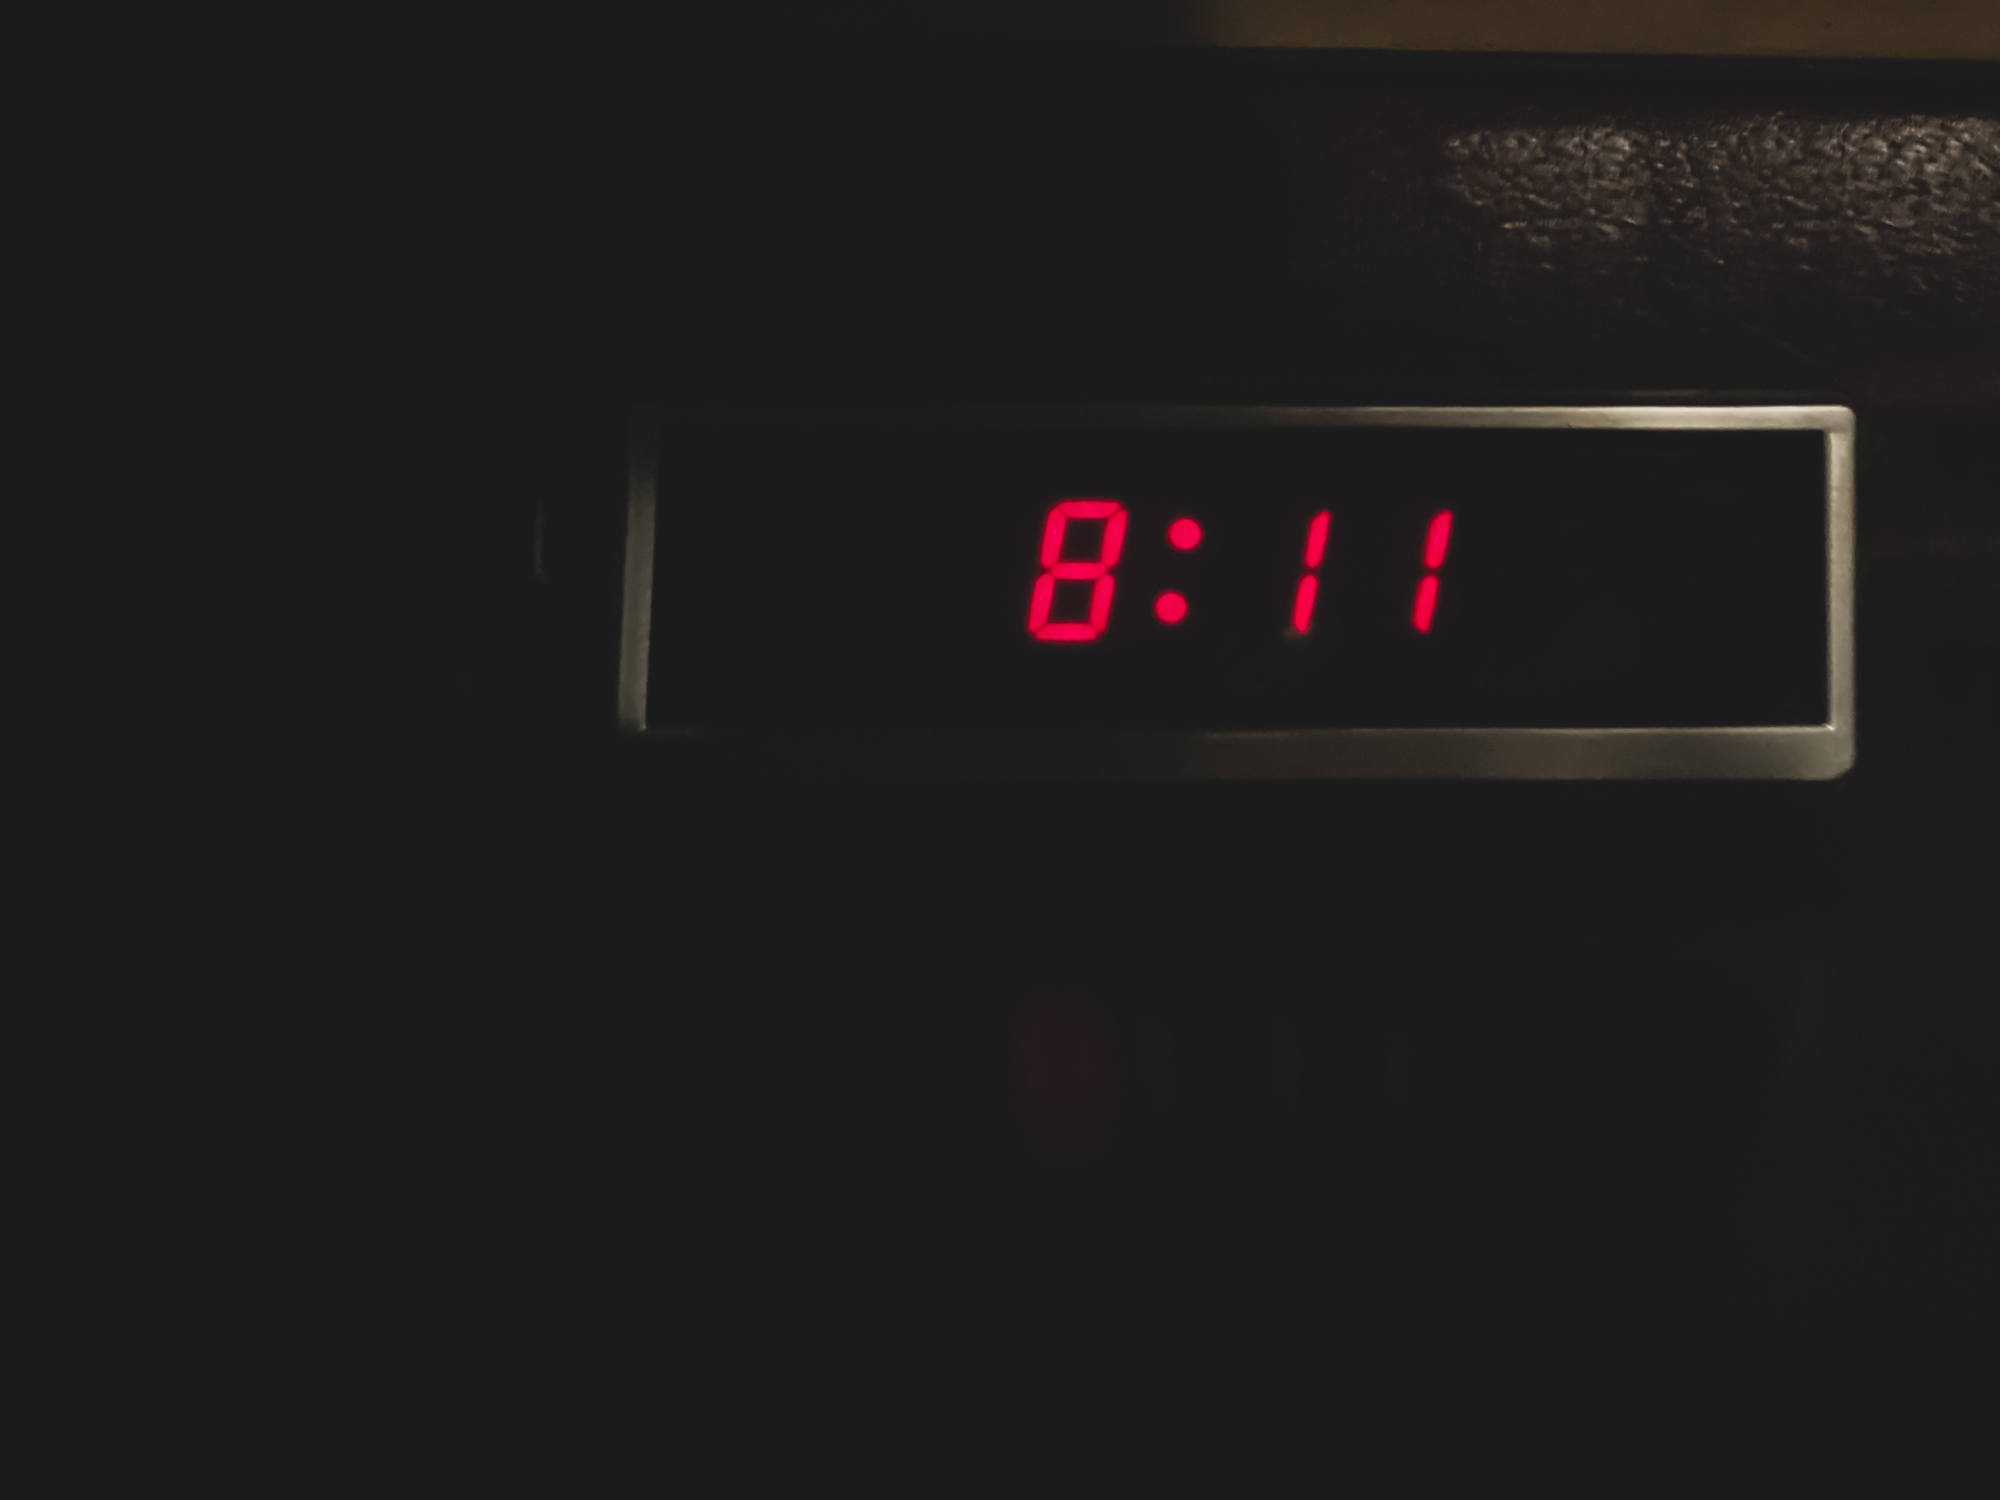 Digital clock displaying the time 8:11 in a dark setting